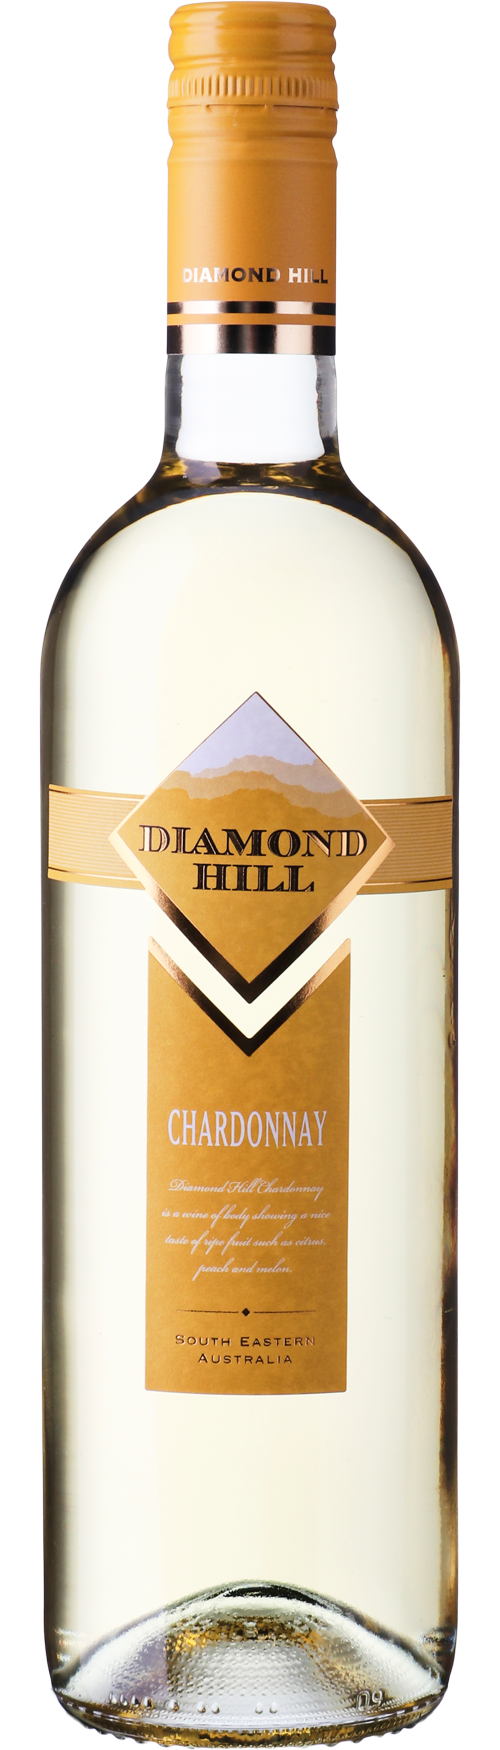 Diamond Hill Chardonnay South Eastern Australia 2018 - Bloom Concept